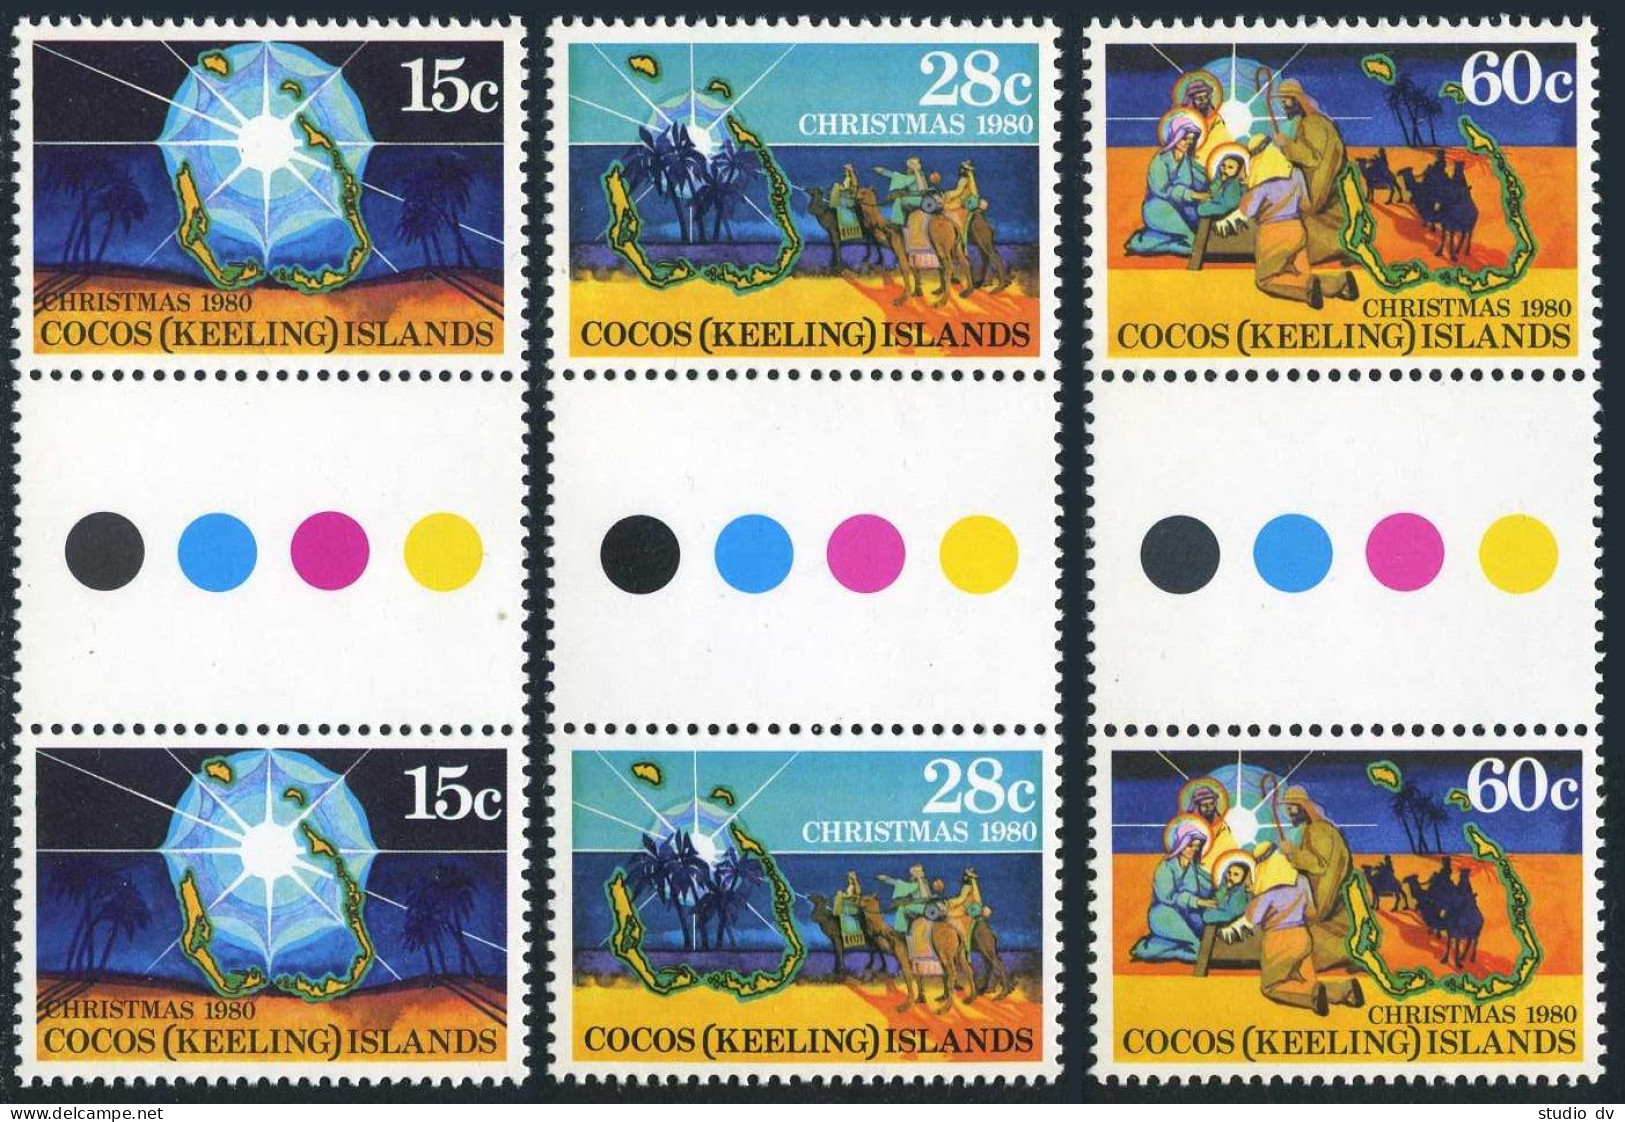 Cocos Isls 53-55 Gutter,MNH.Michel 53-55. Christmas 1980.Map,Three Kings,Camels. - Kokosinseln (Keeling Islands)